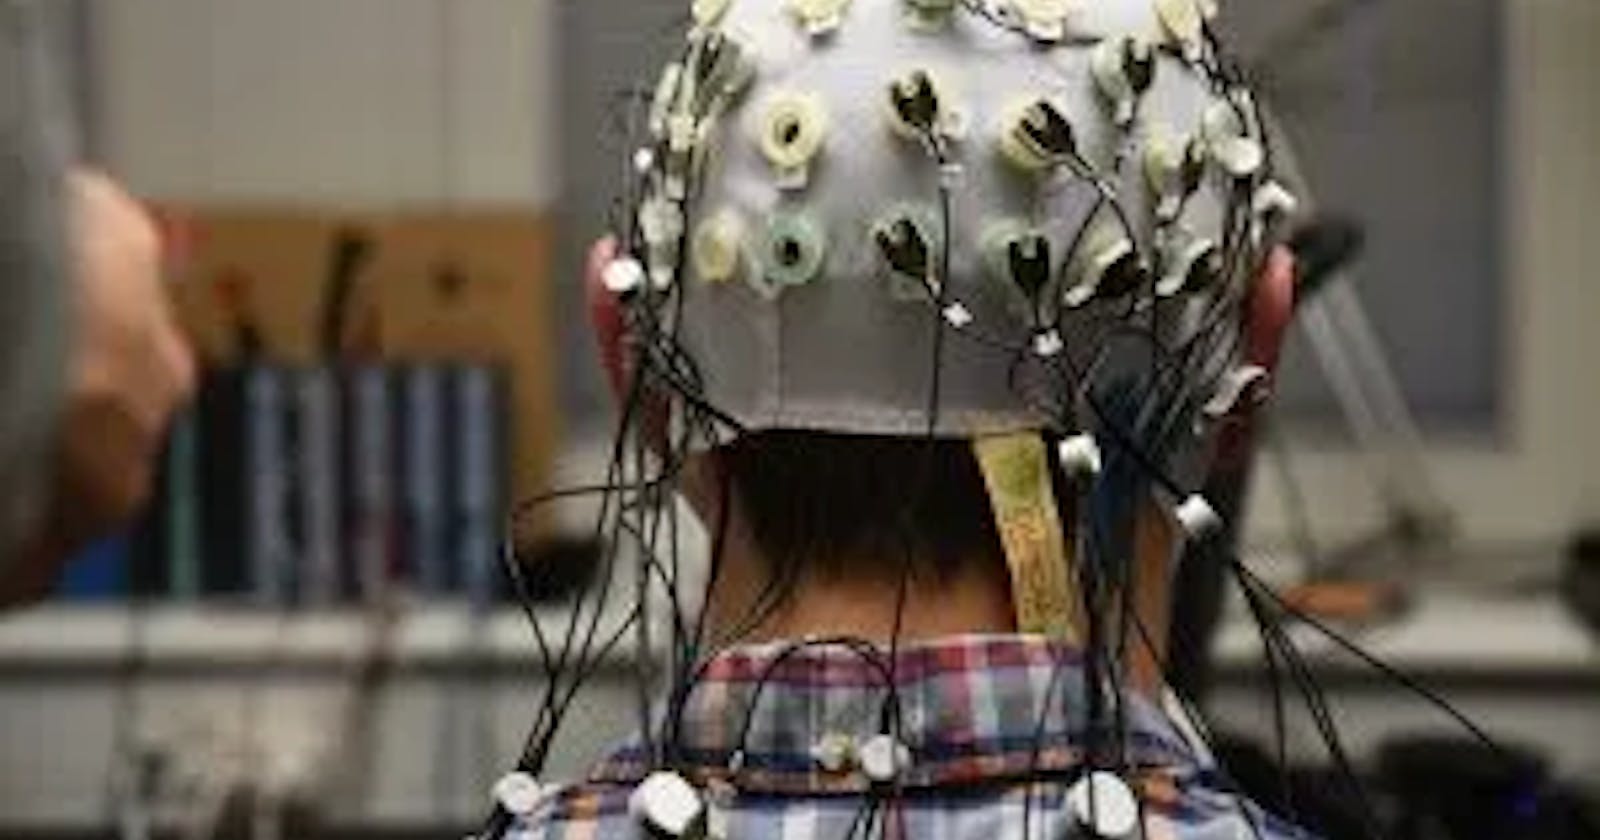 EEG Multiclass Motor Imagery Classification Using CNN and CSP